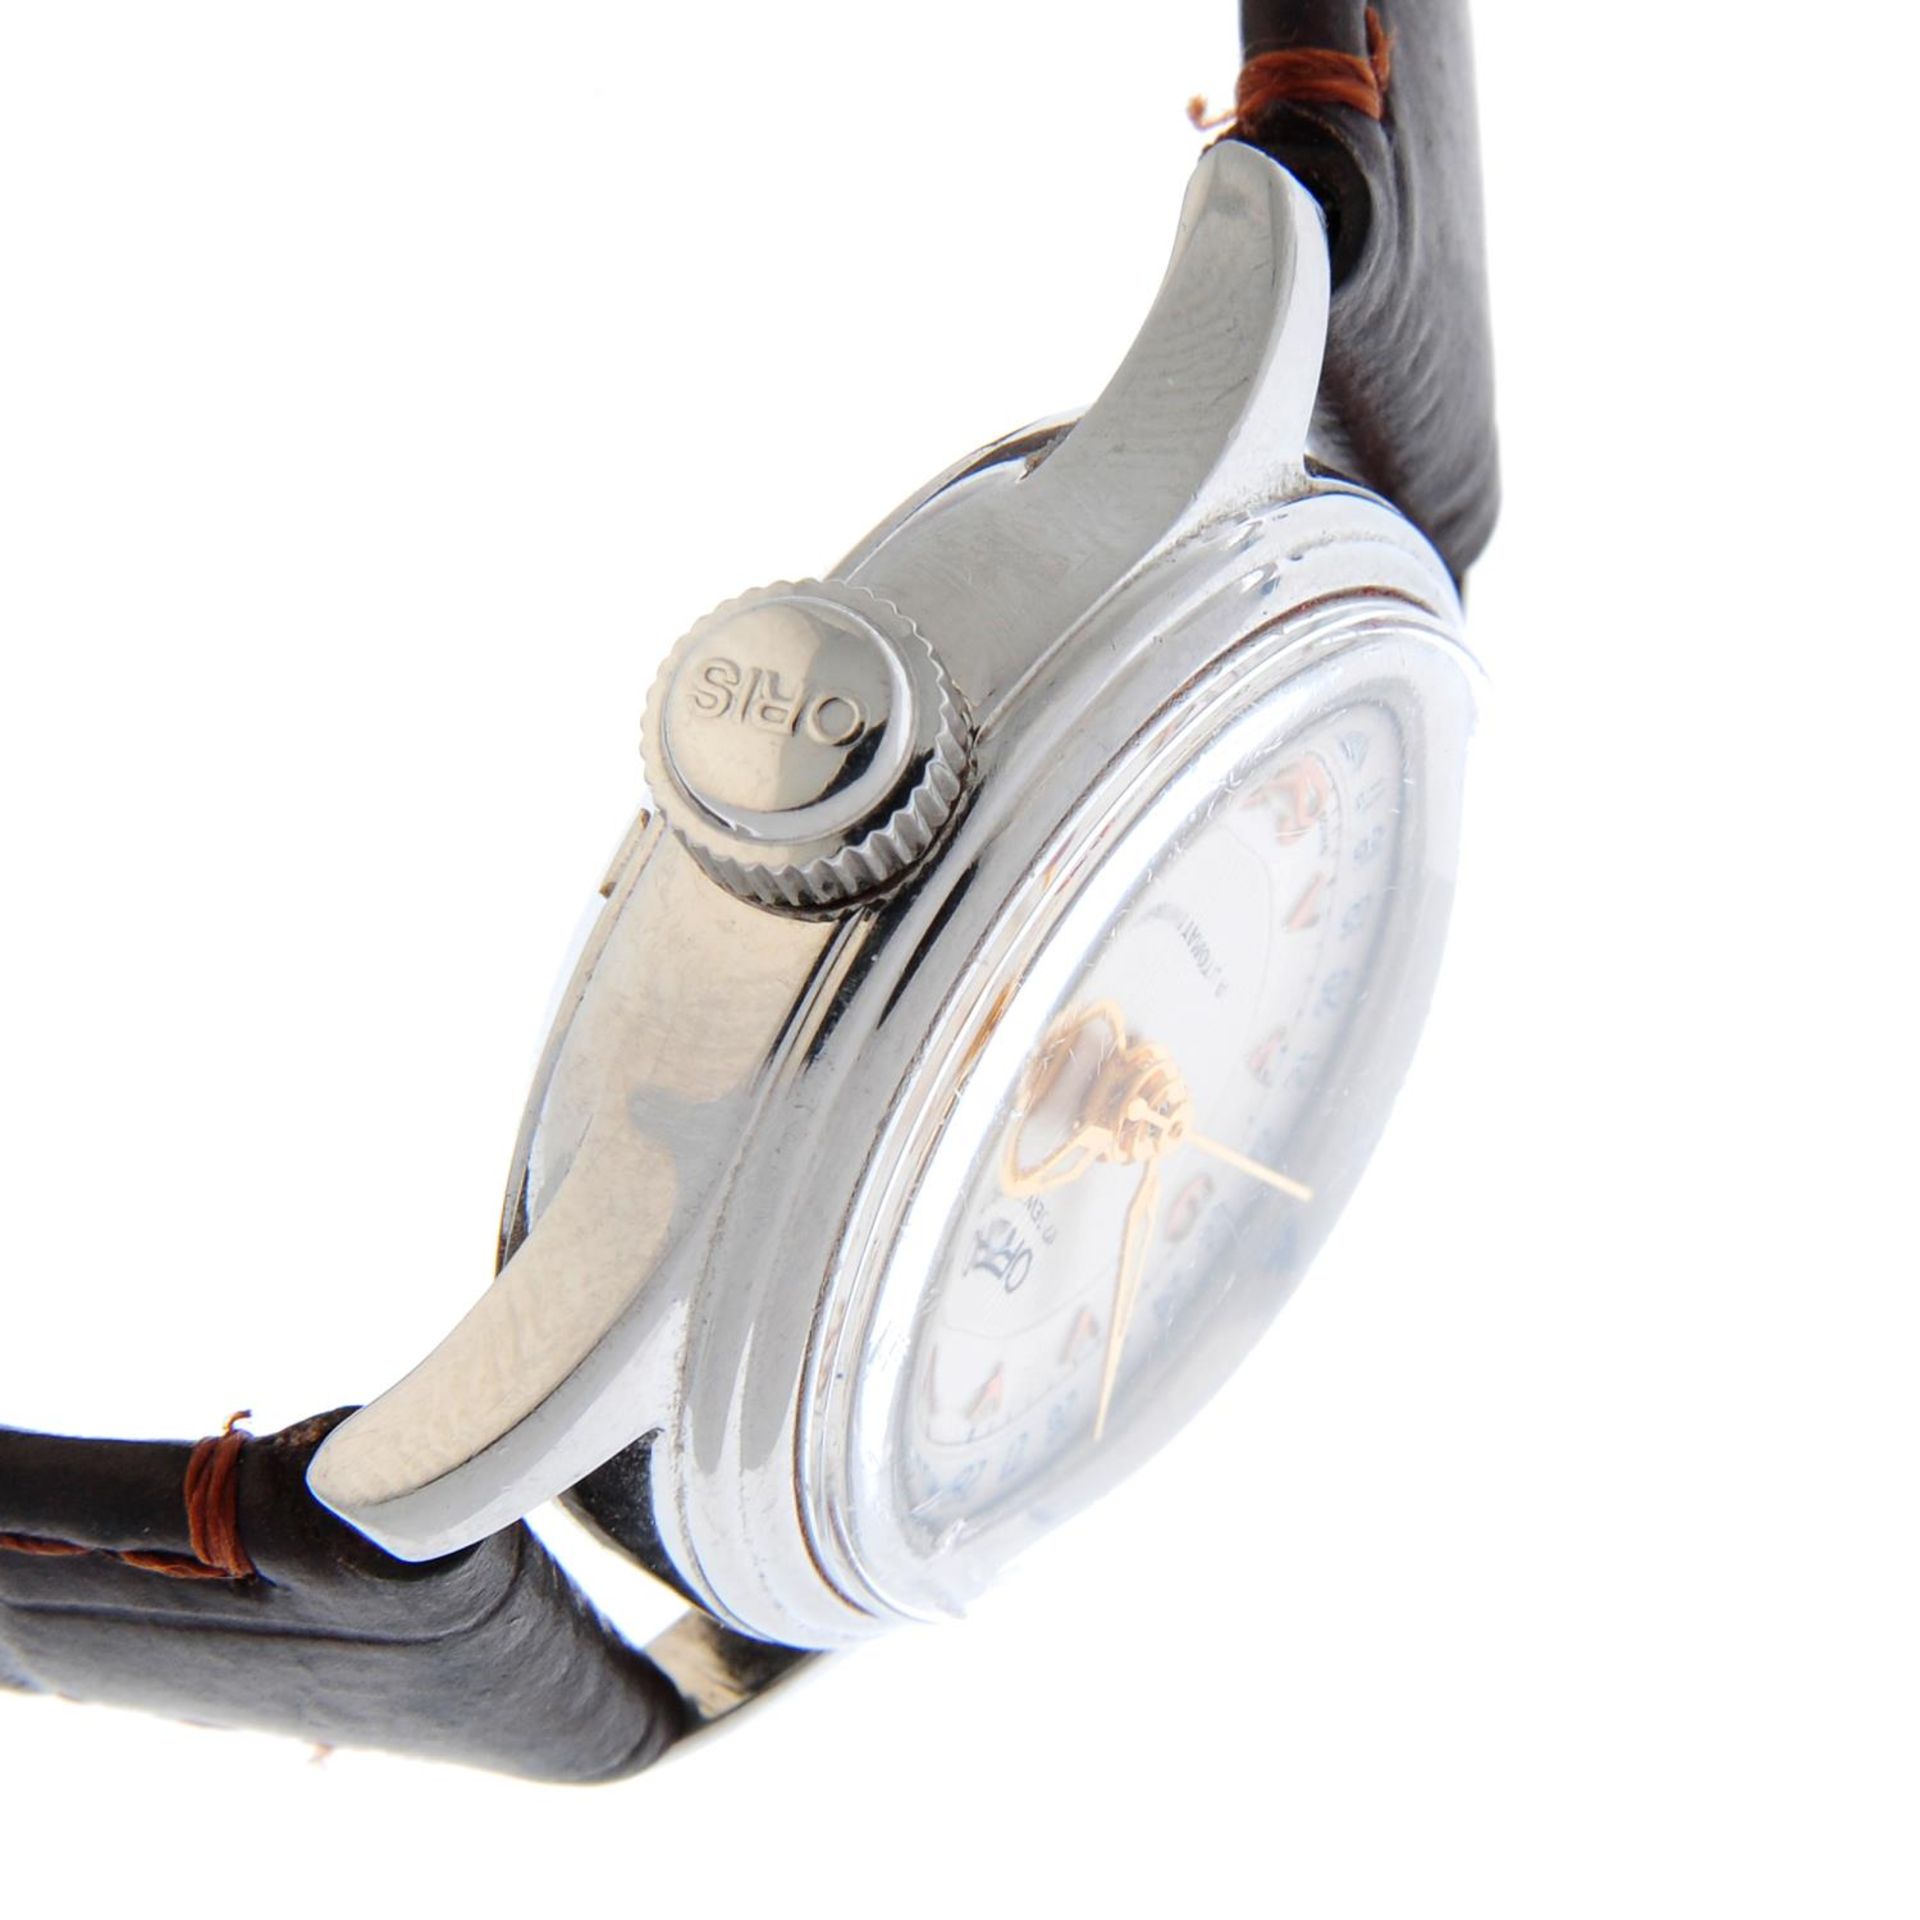 ORIS - a Pointer Date wrist watch. - Image 3 of 4